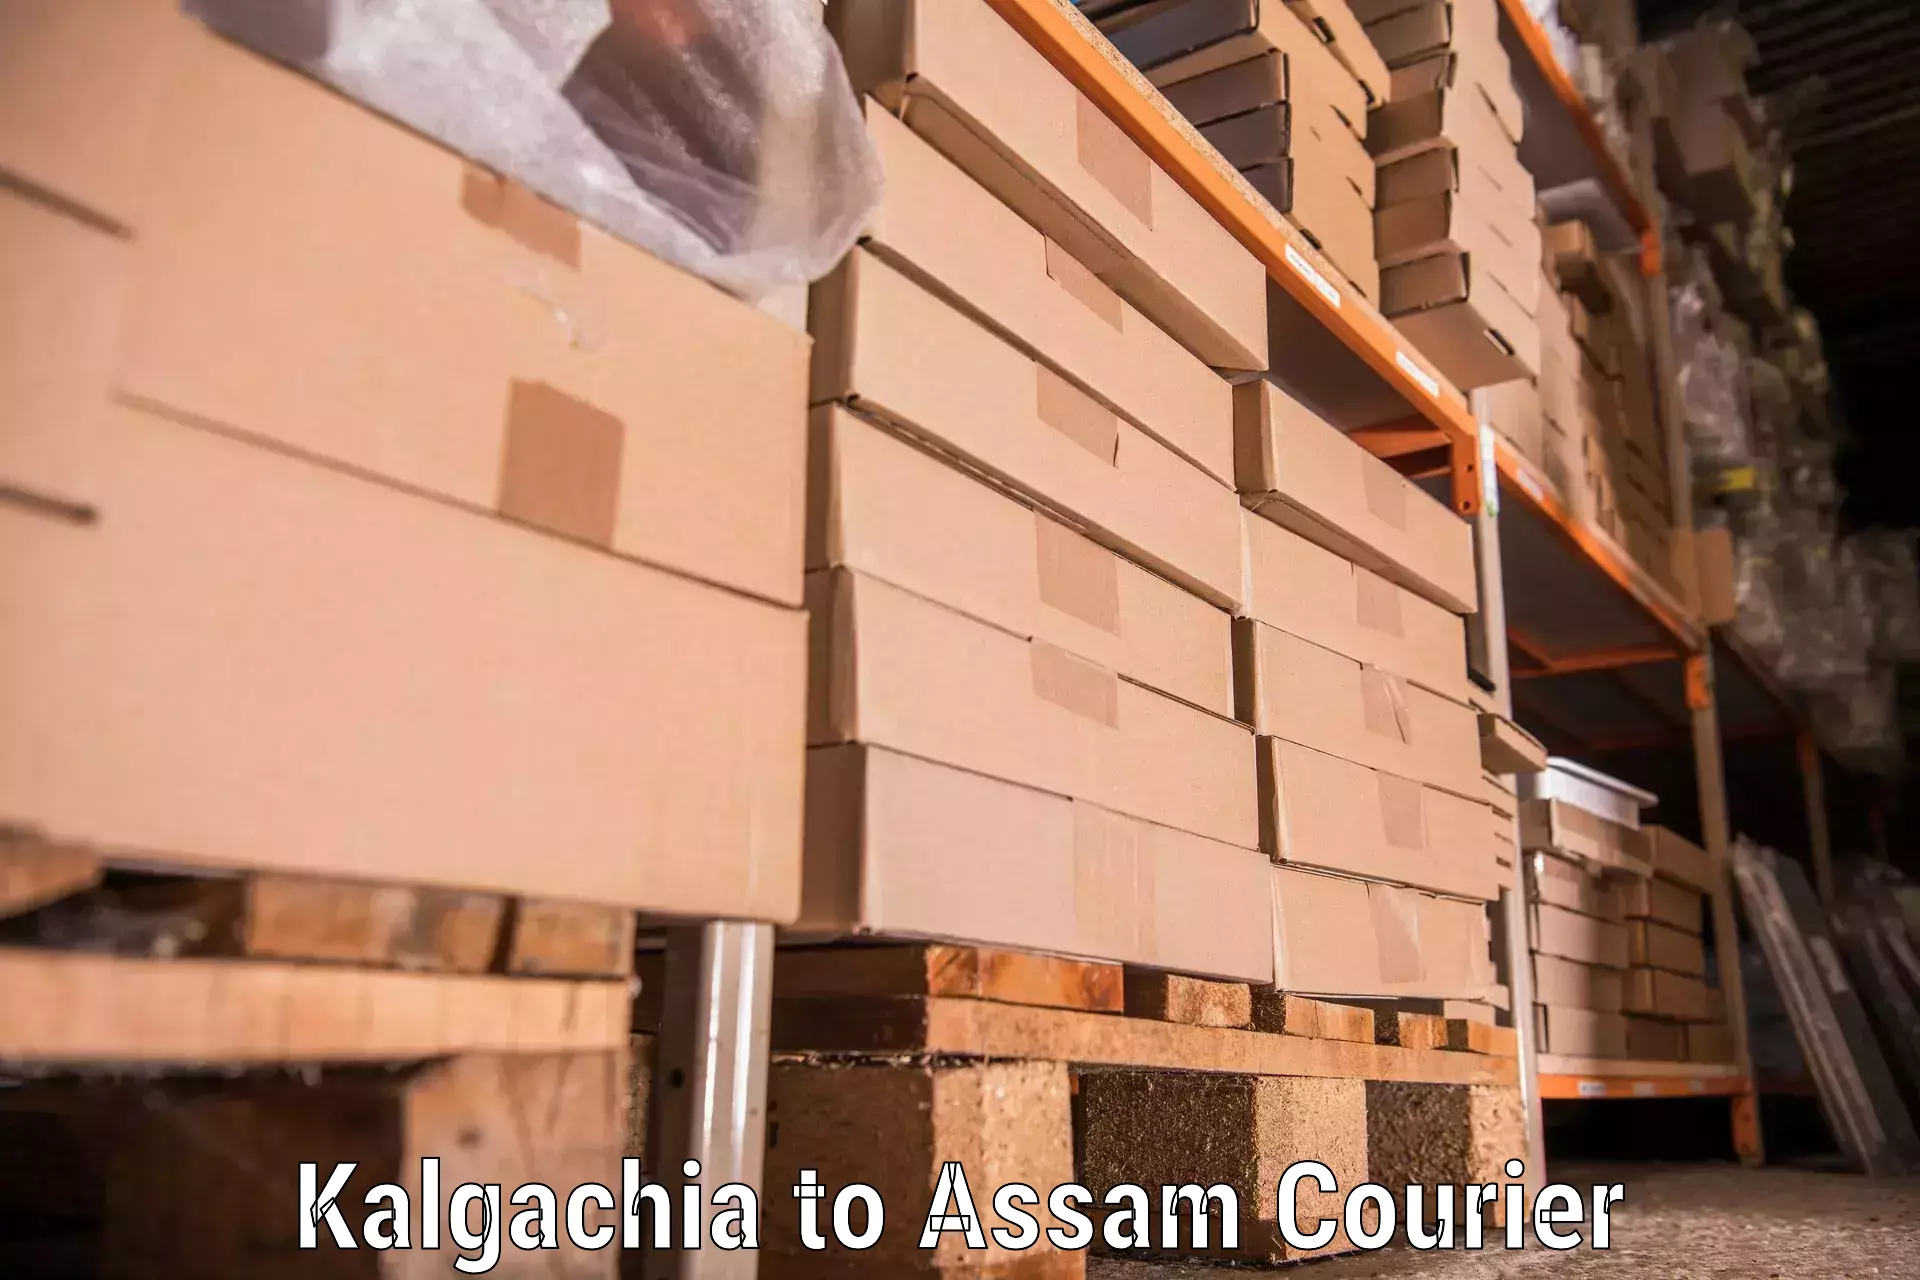 Specialized moving company in Kalgachia to Lala Assam